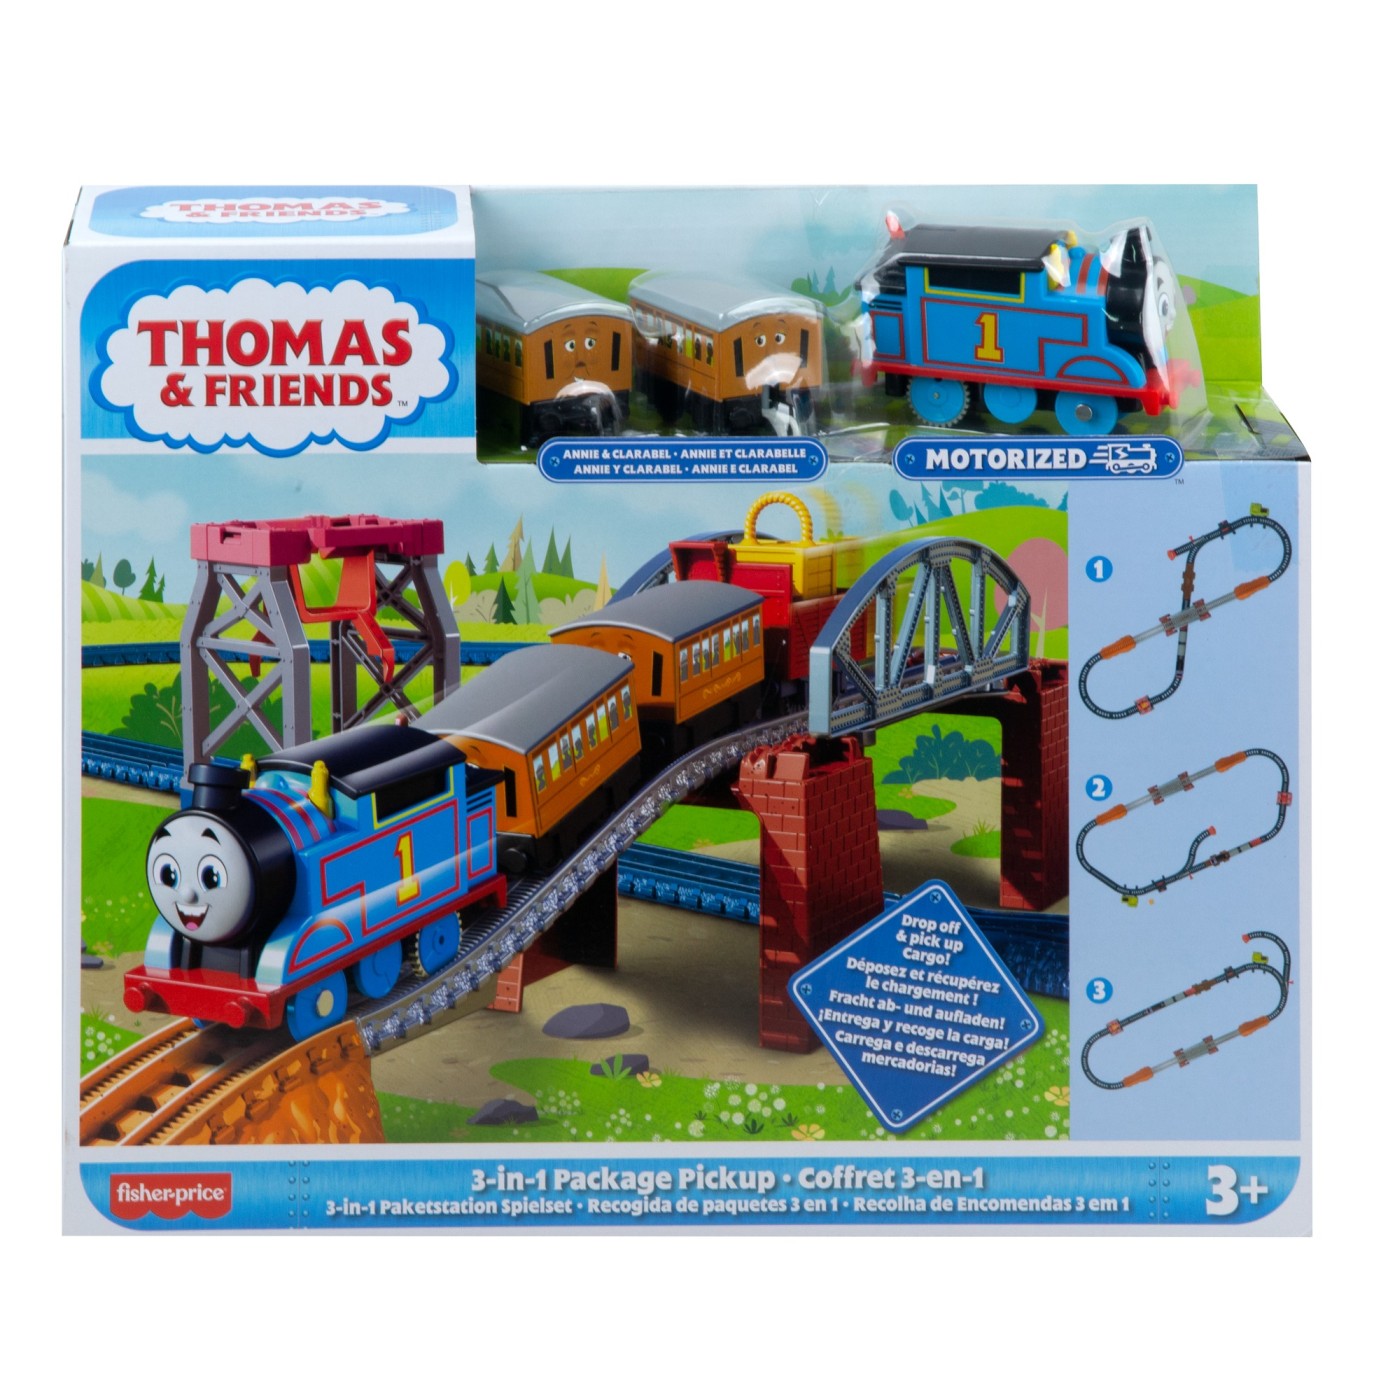 Set de joaca - Thomas & Friends - 3 in 1 Package Pickup | Fisher-Price